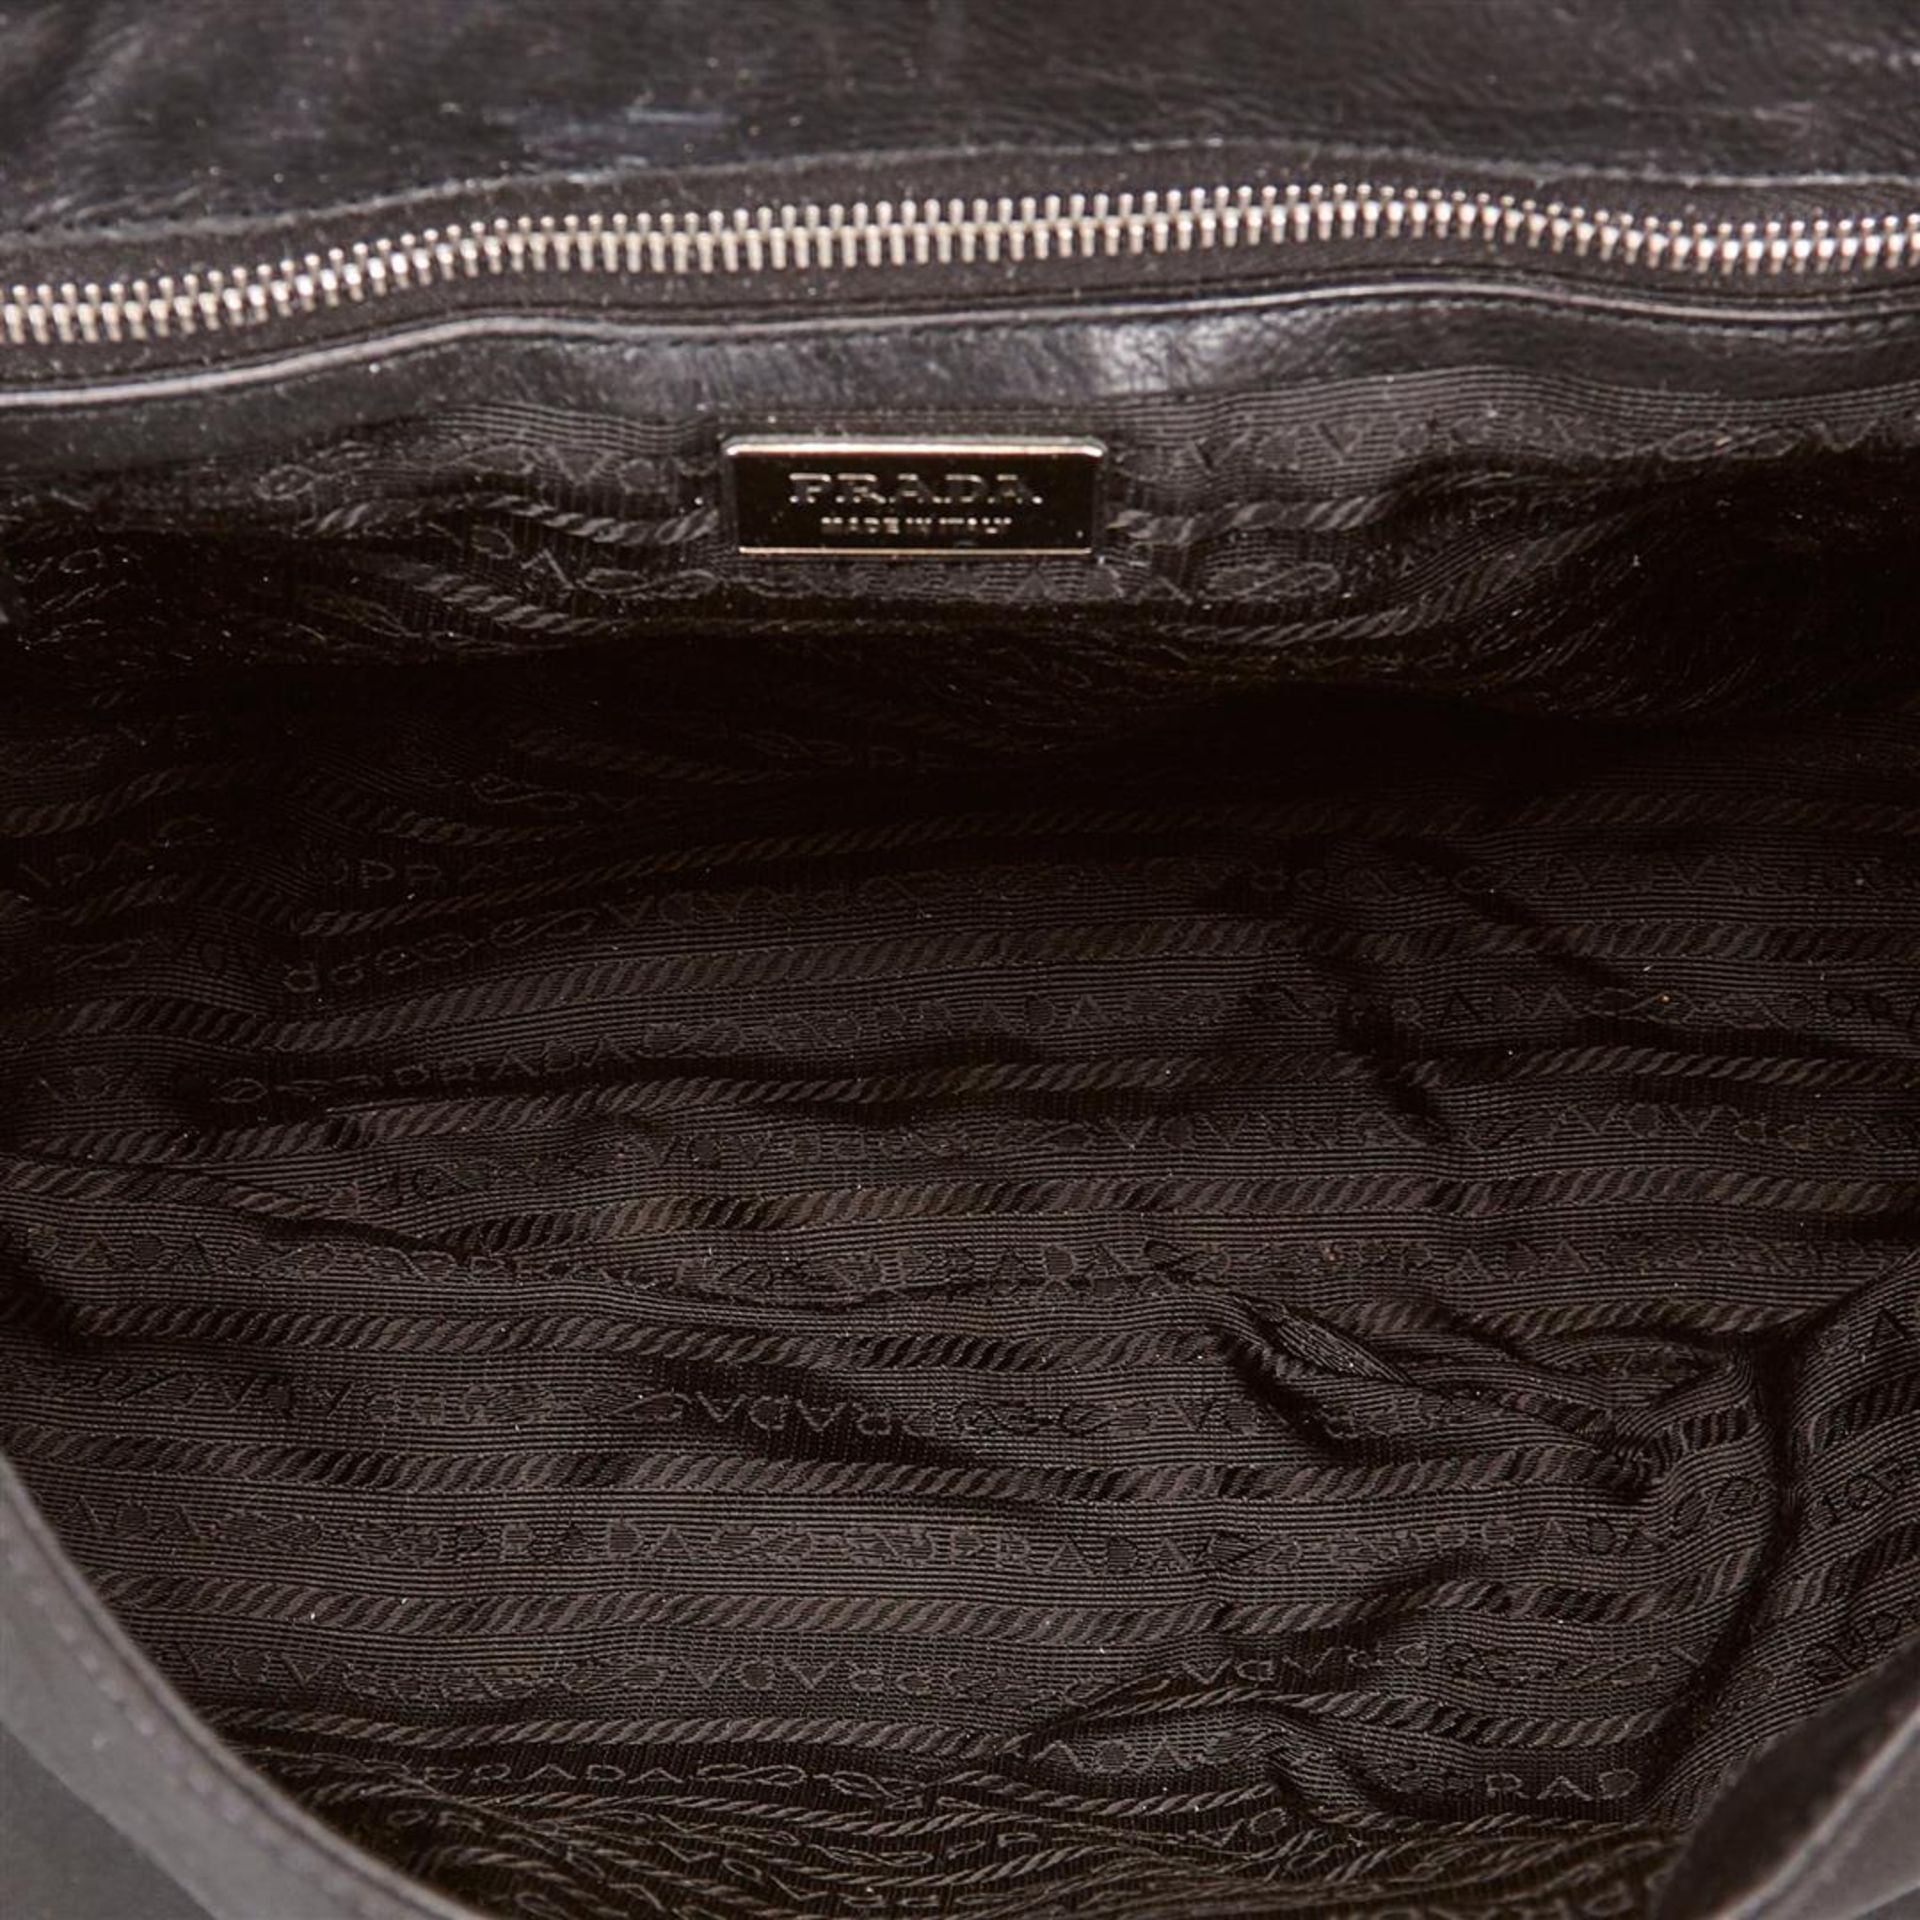 Prada Nylon Shoulder Bag - Image 6 of 8